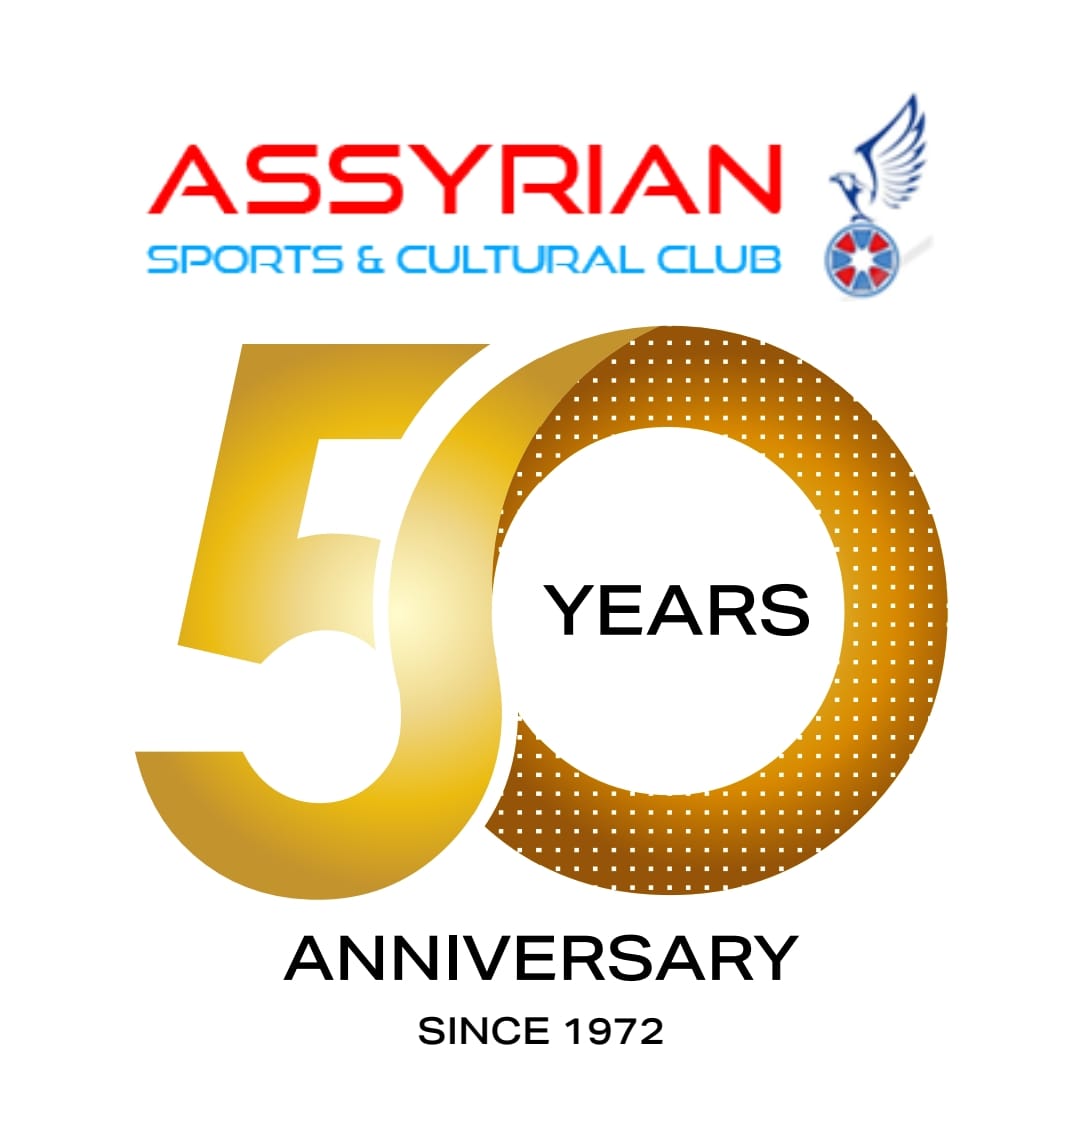 Assyrian Sports & Cultural Club 50 Years Anniversary